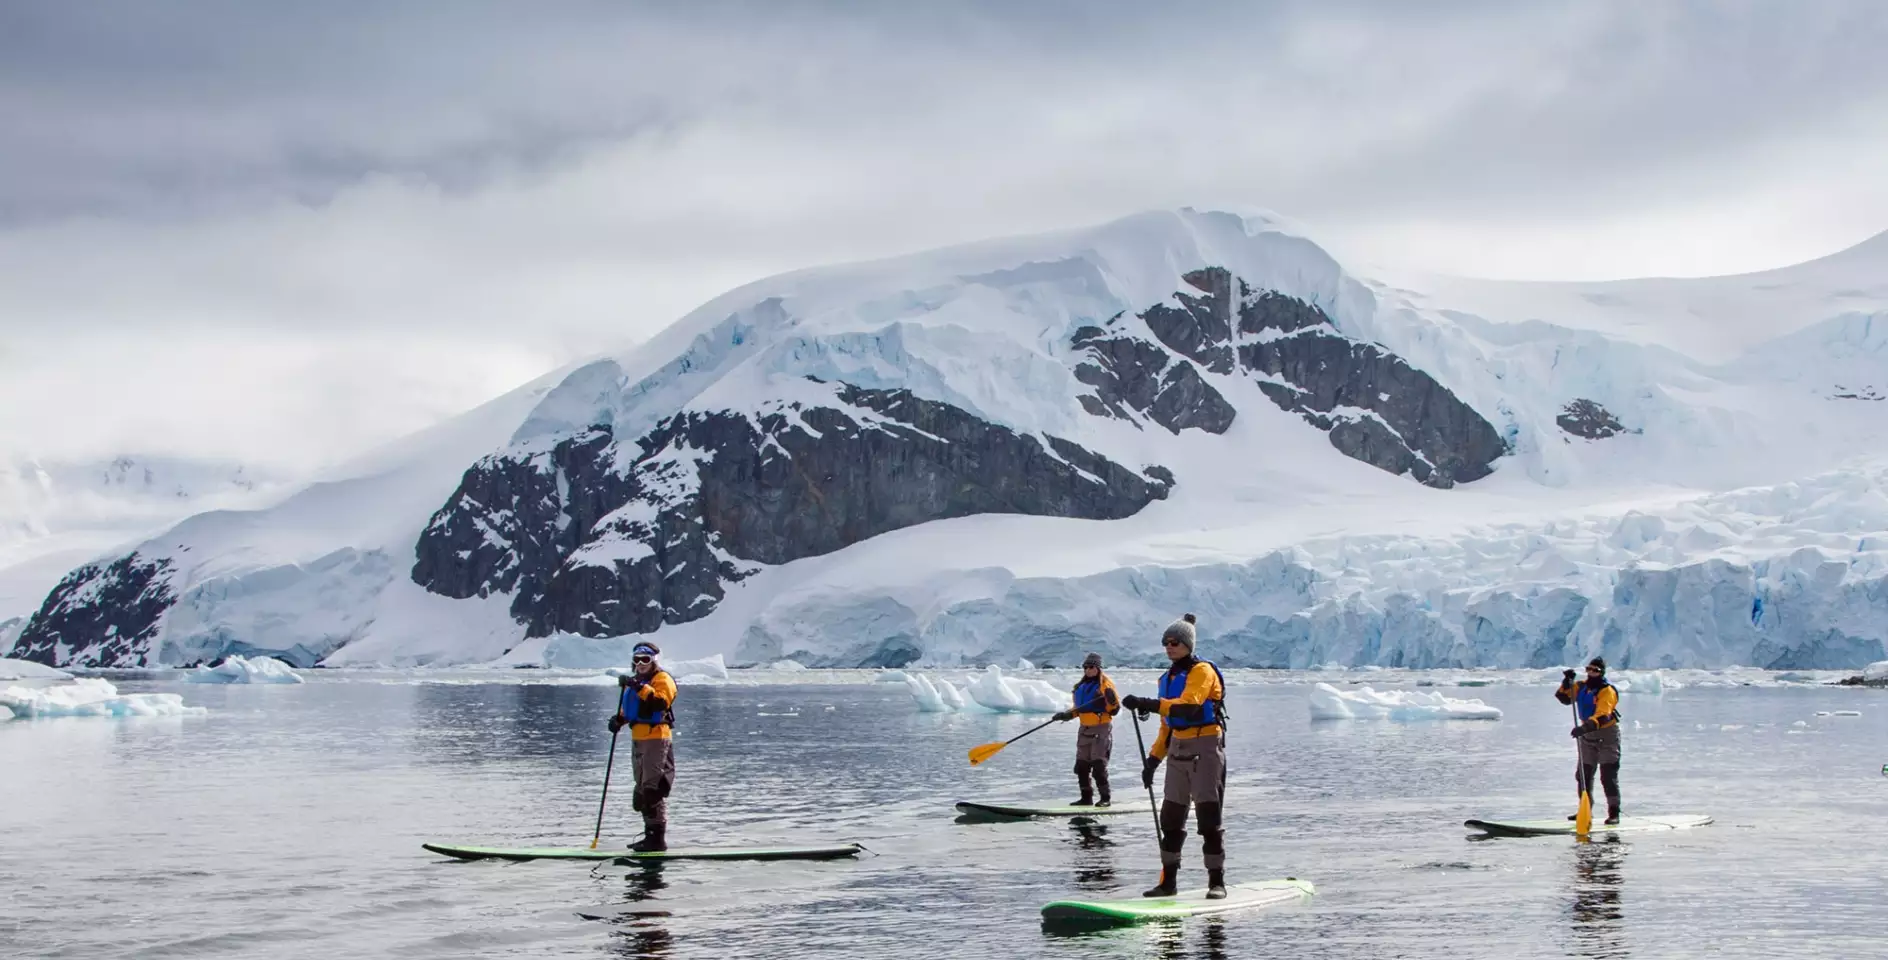 Paddle boarding in the polar regions